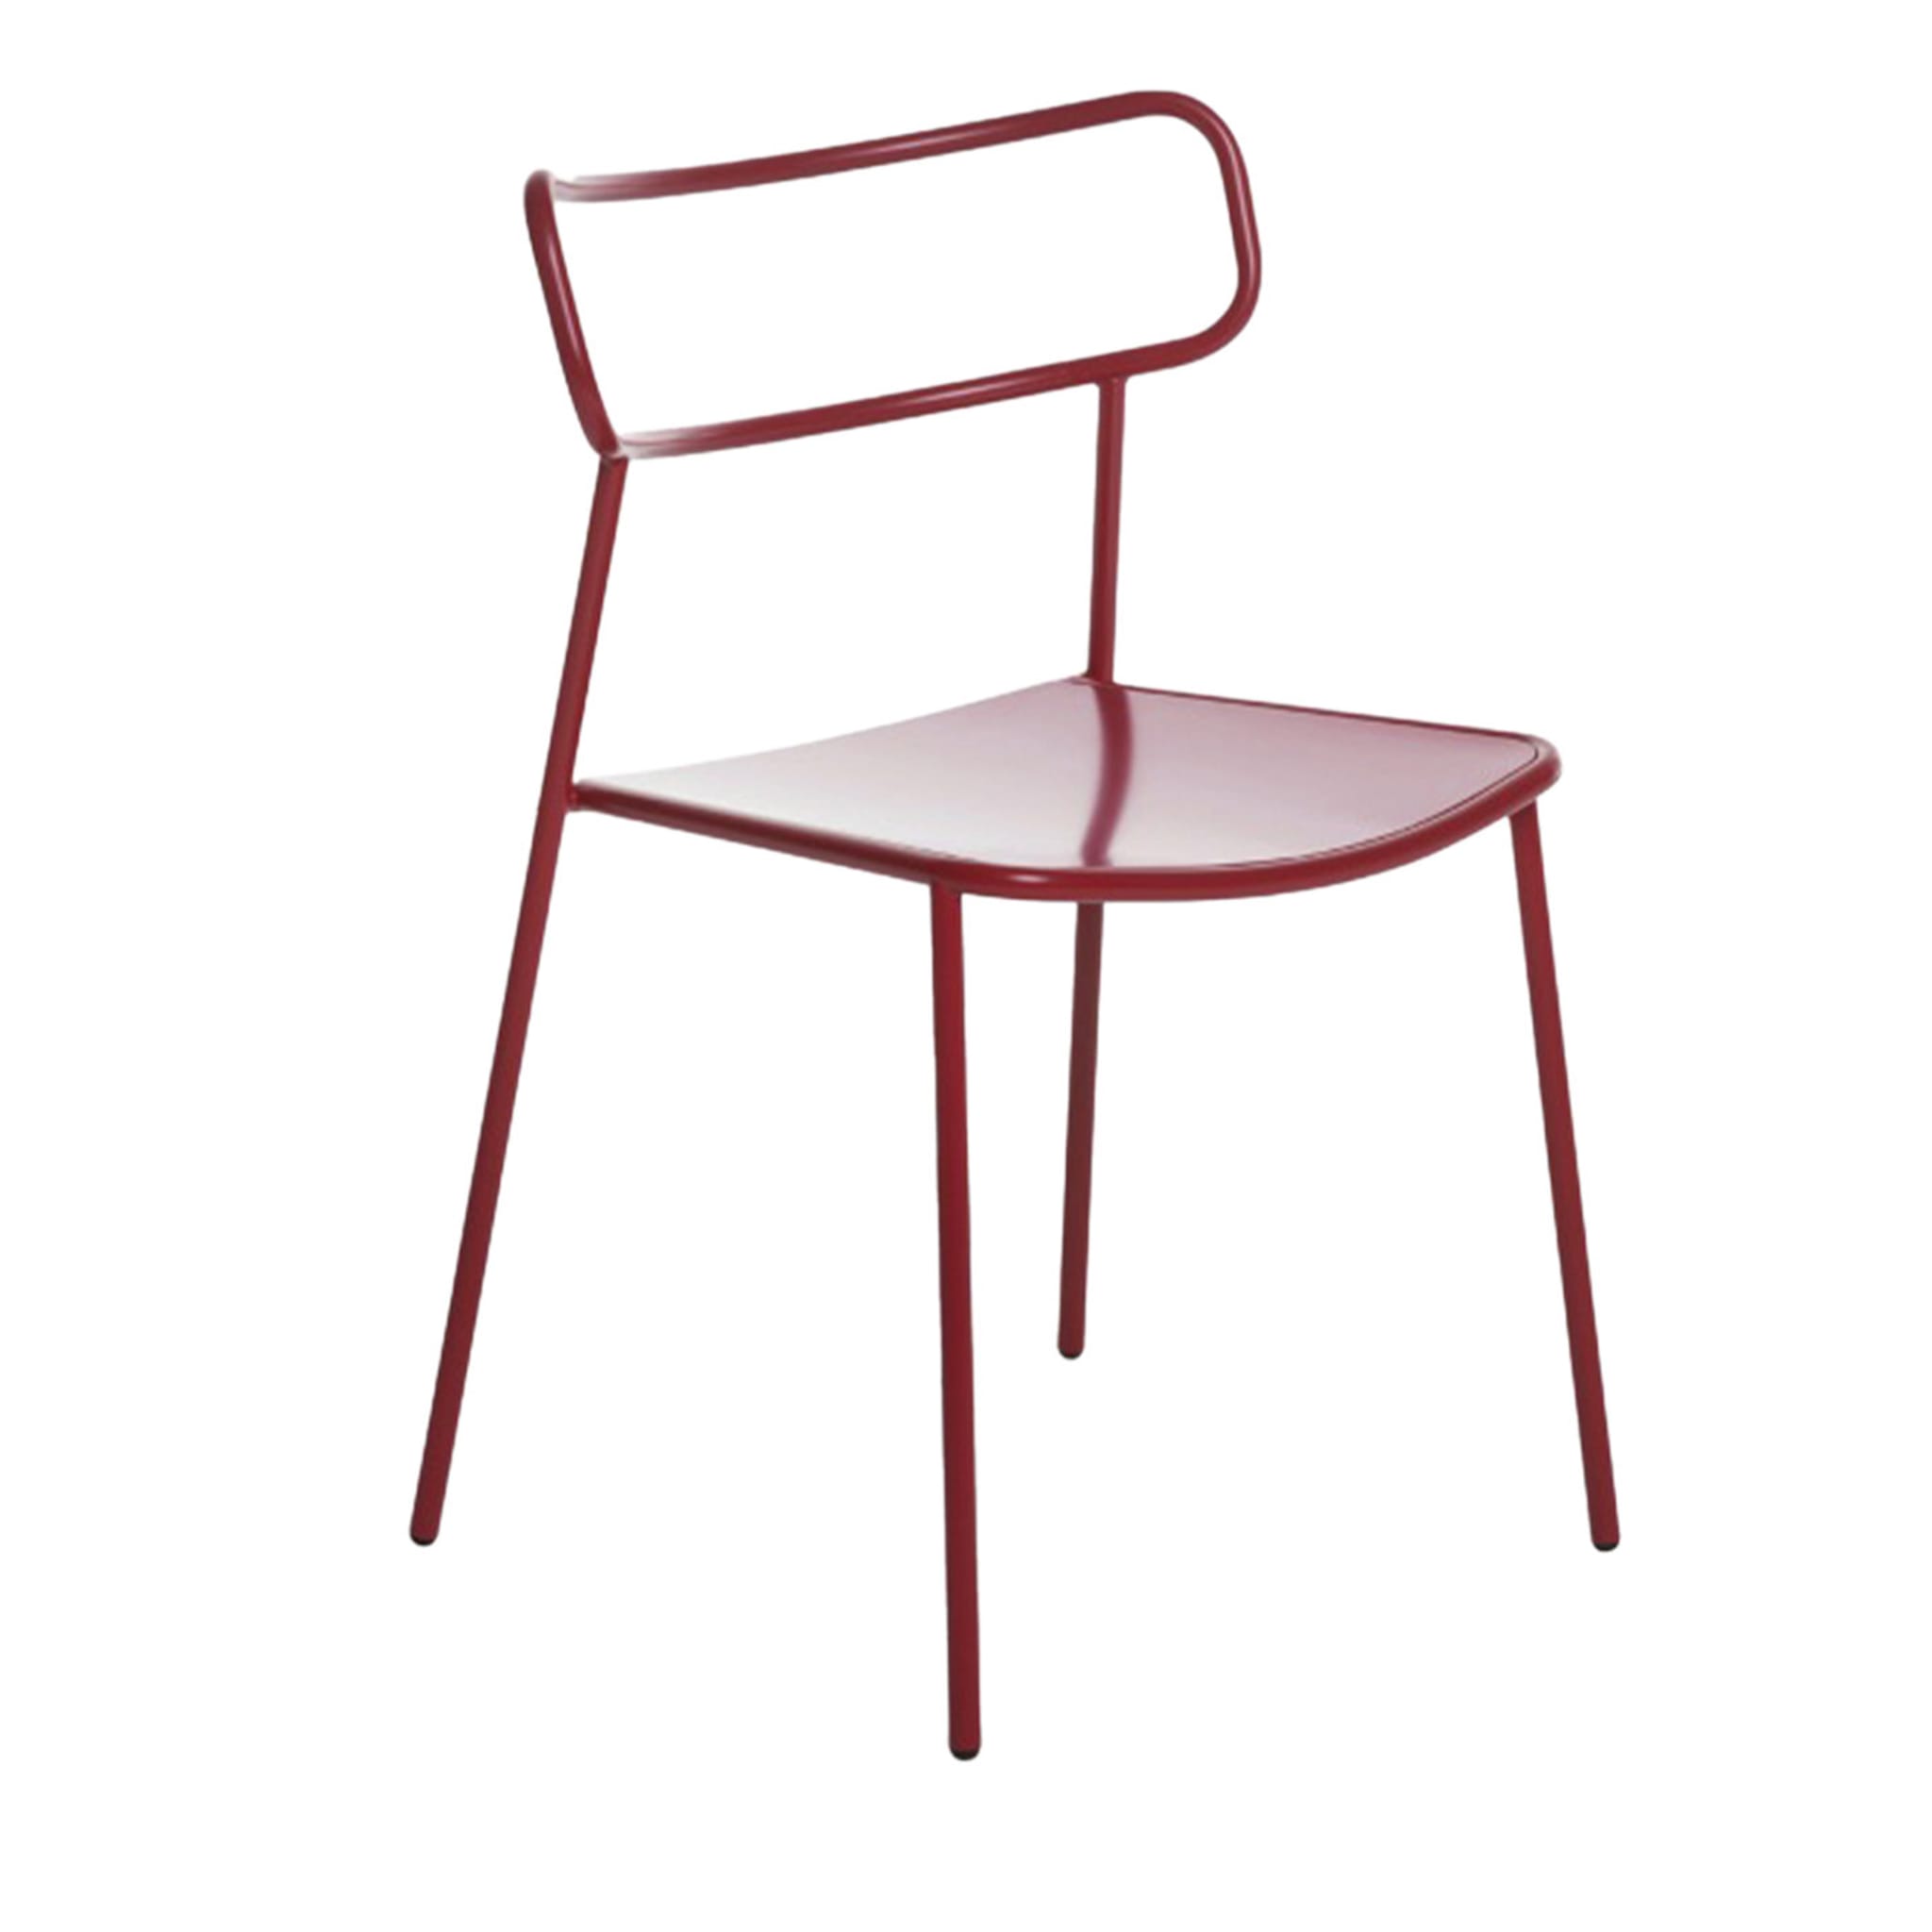 Paloma Red Outdoor Chair by Radice Orlandini designstudio  - Main view